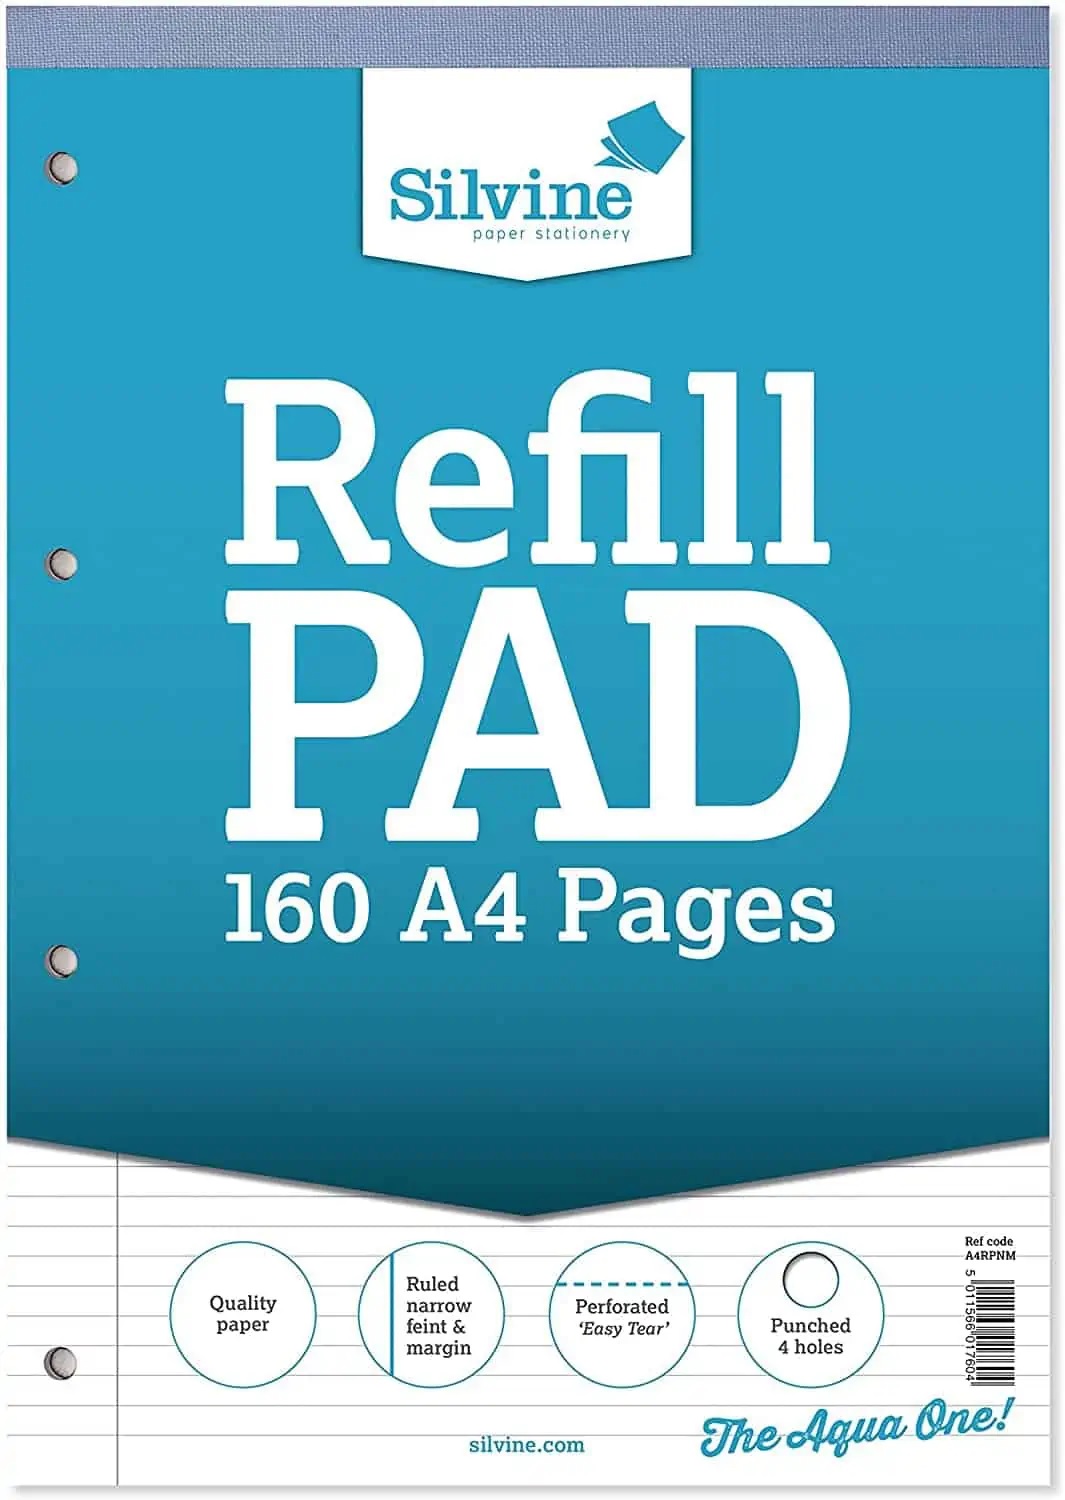 Silvine A4 Refill Pad, 160 pages, N. Feint & Margin (Light Blue cover)